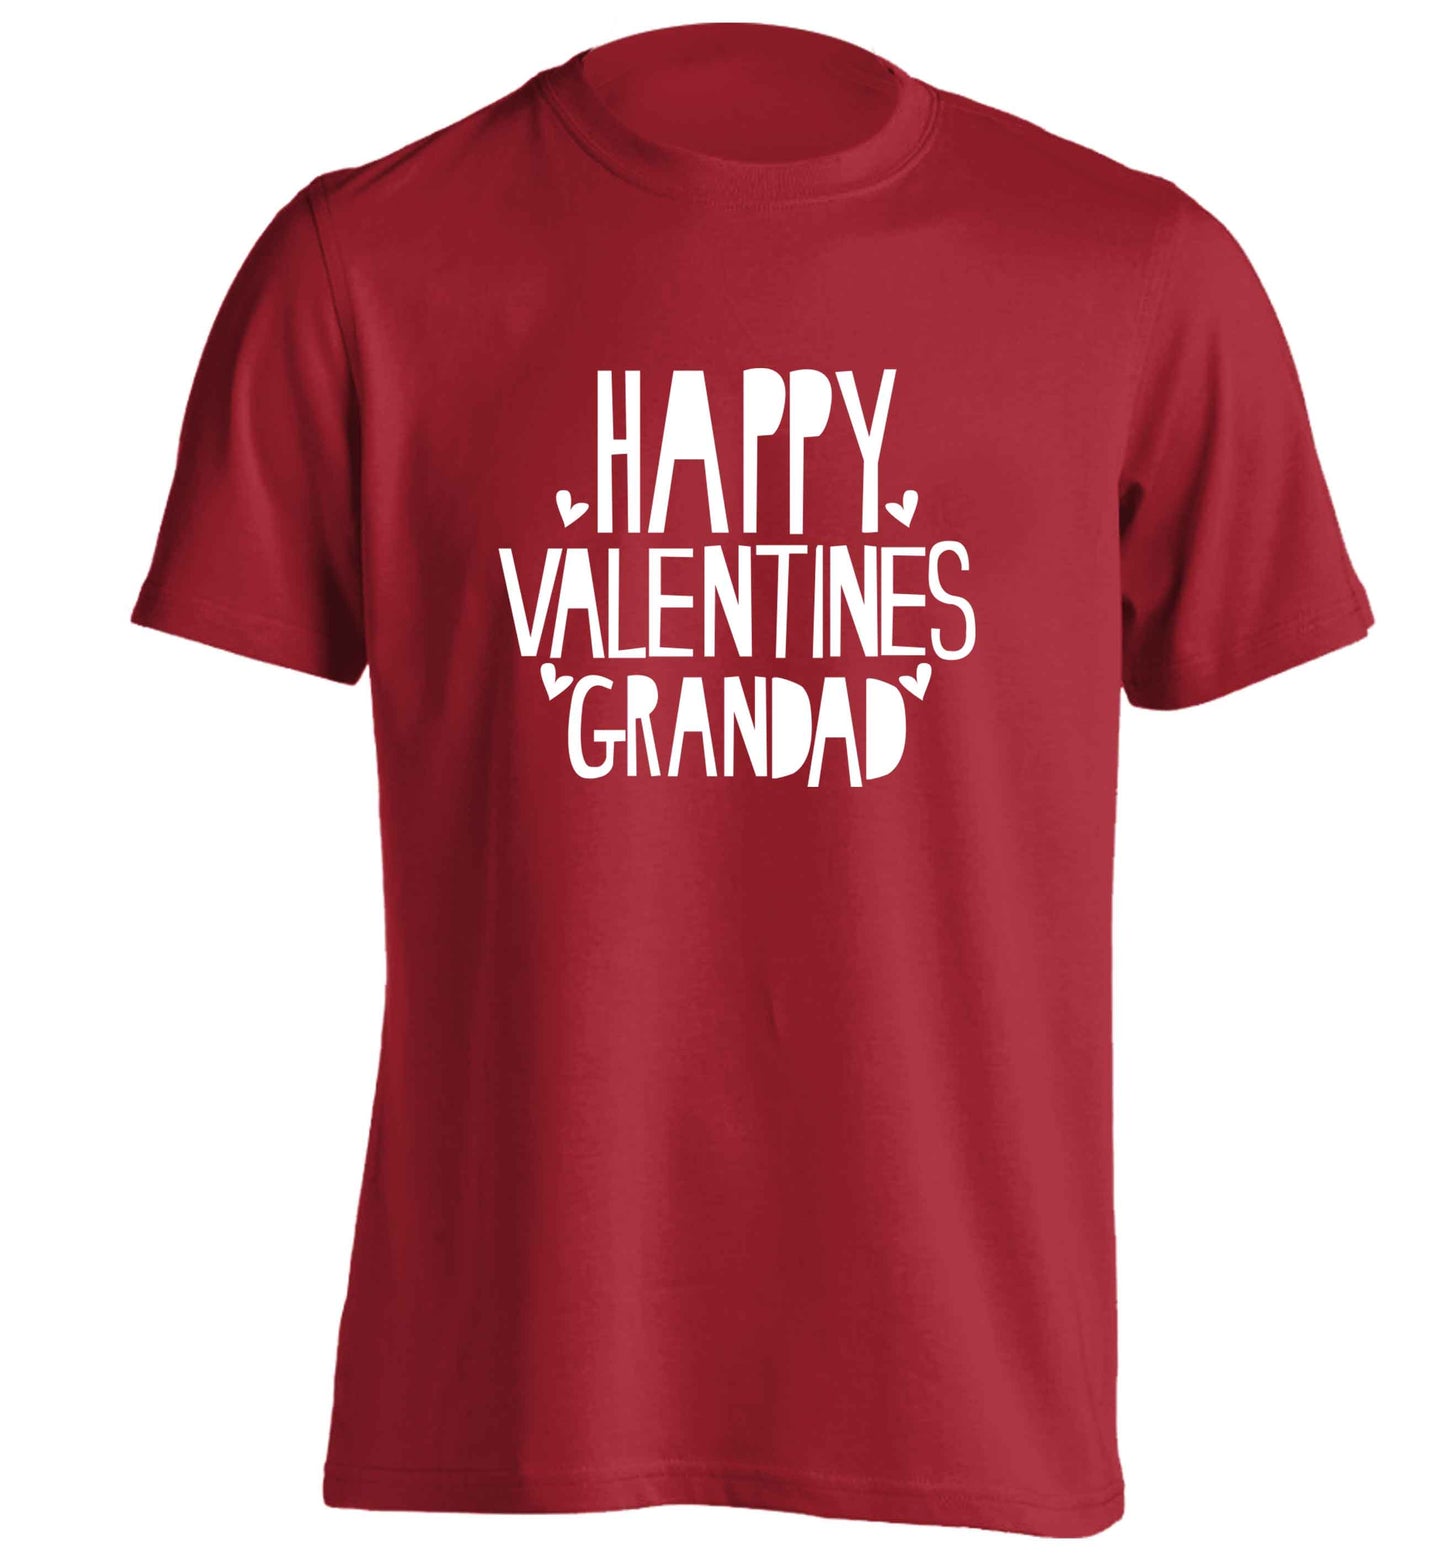 Happy valentines grandad adults unisex red Tshirt 2XL